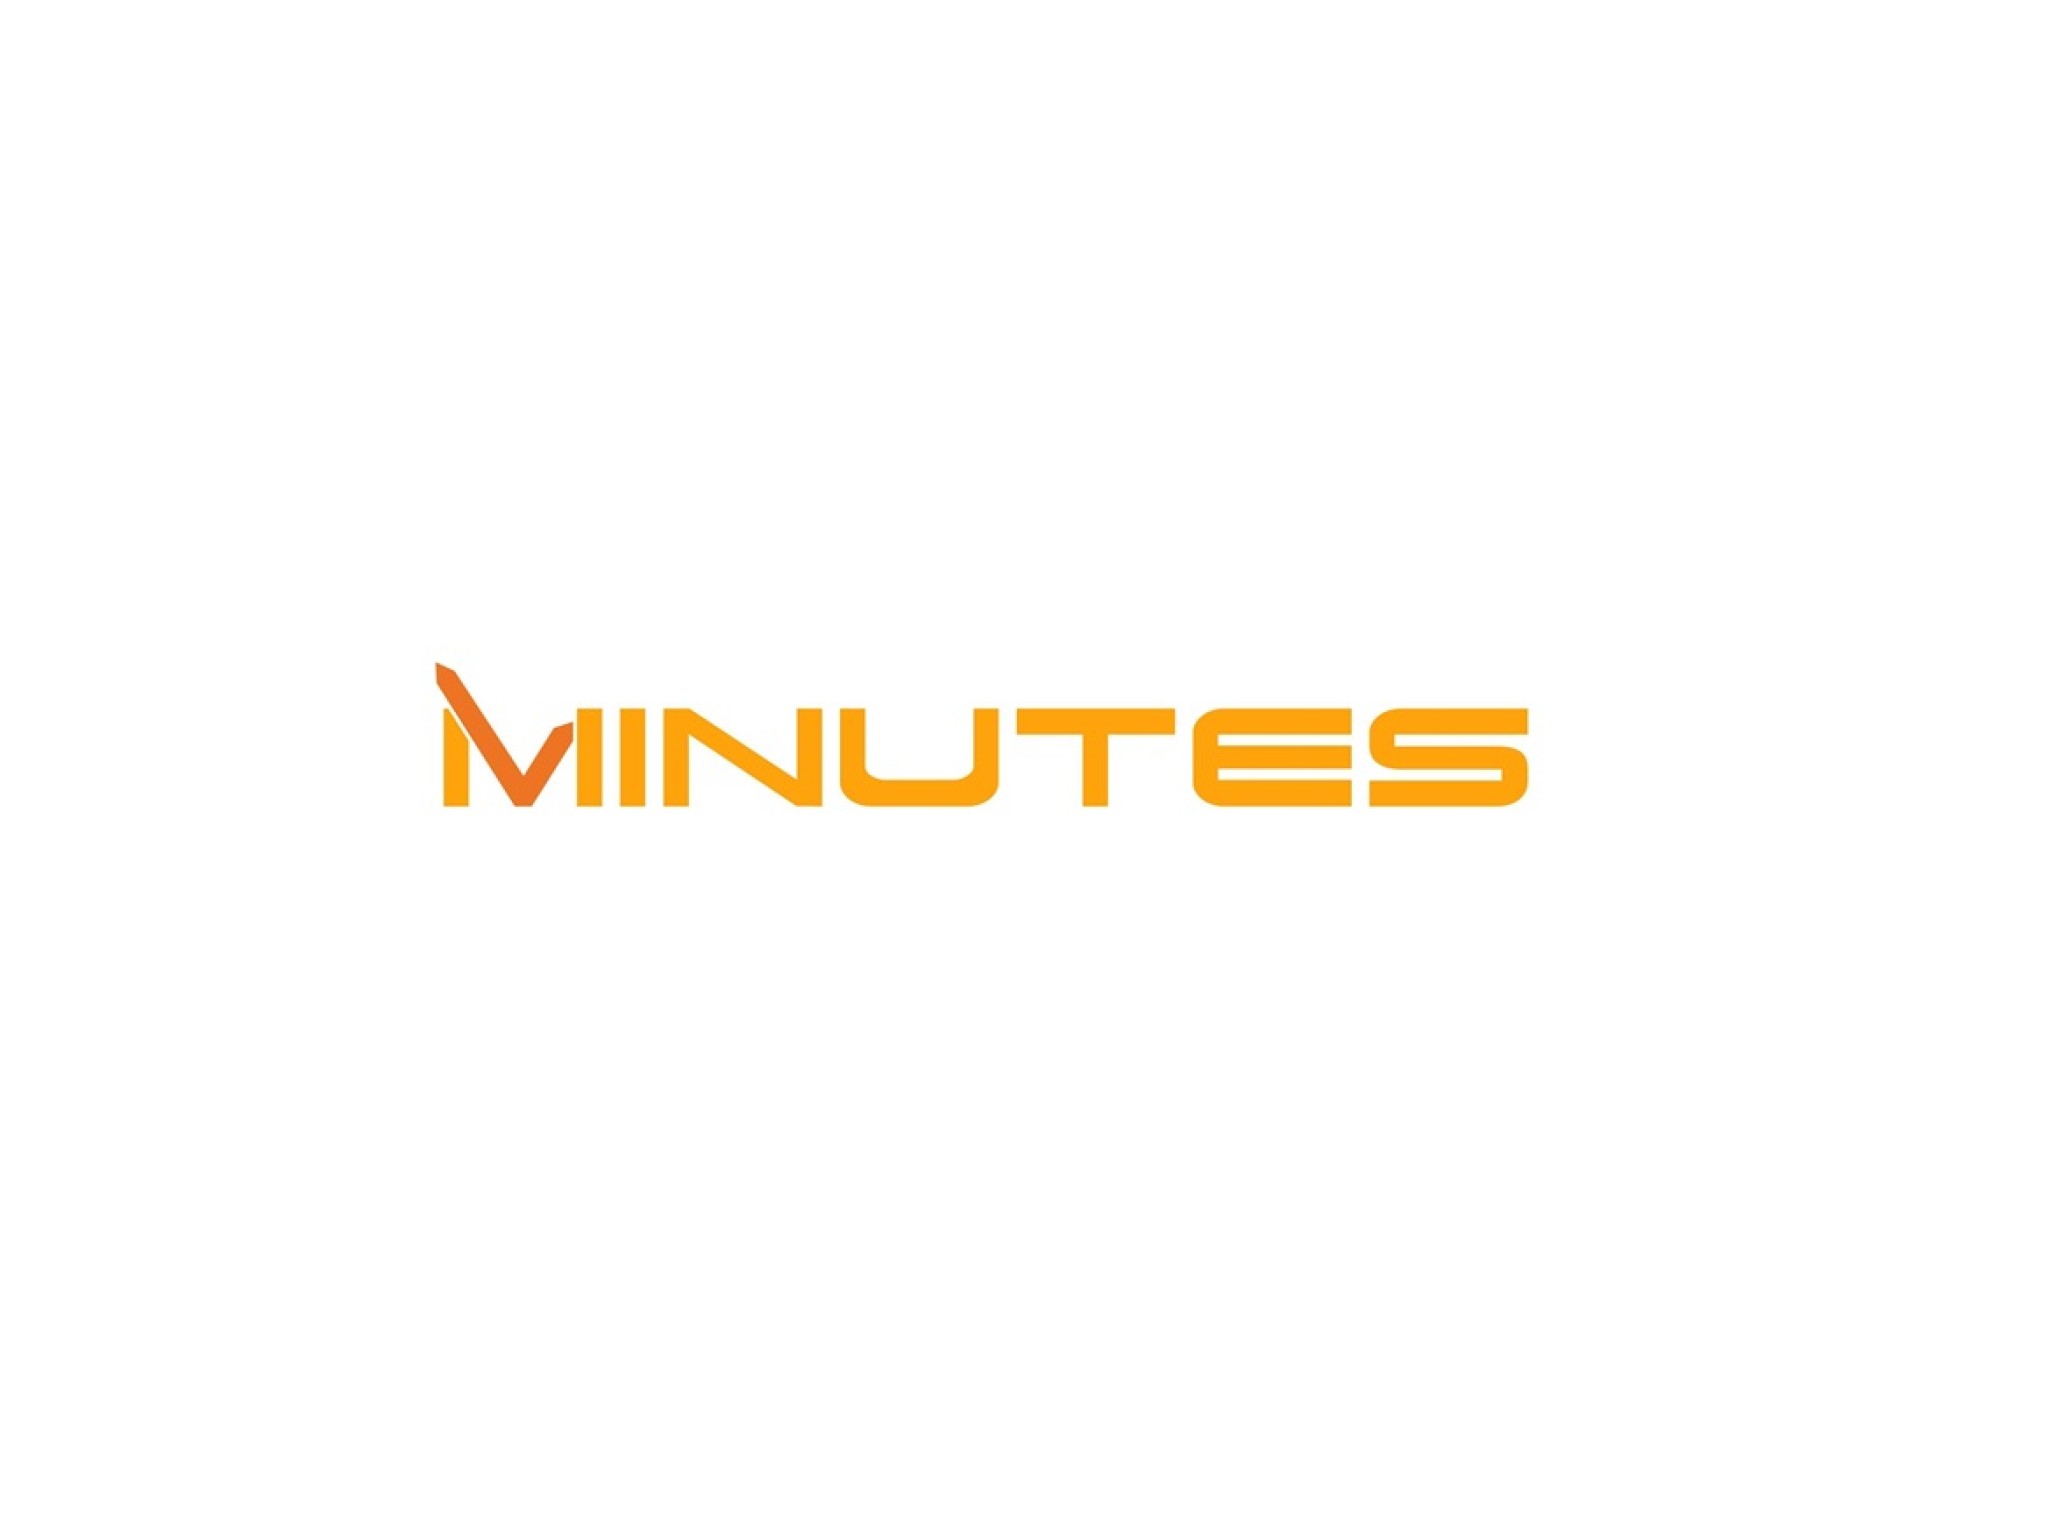 Minutes - Arabian Centre